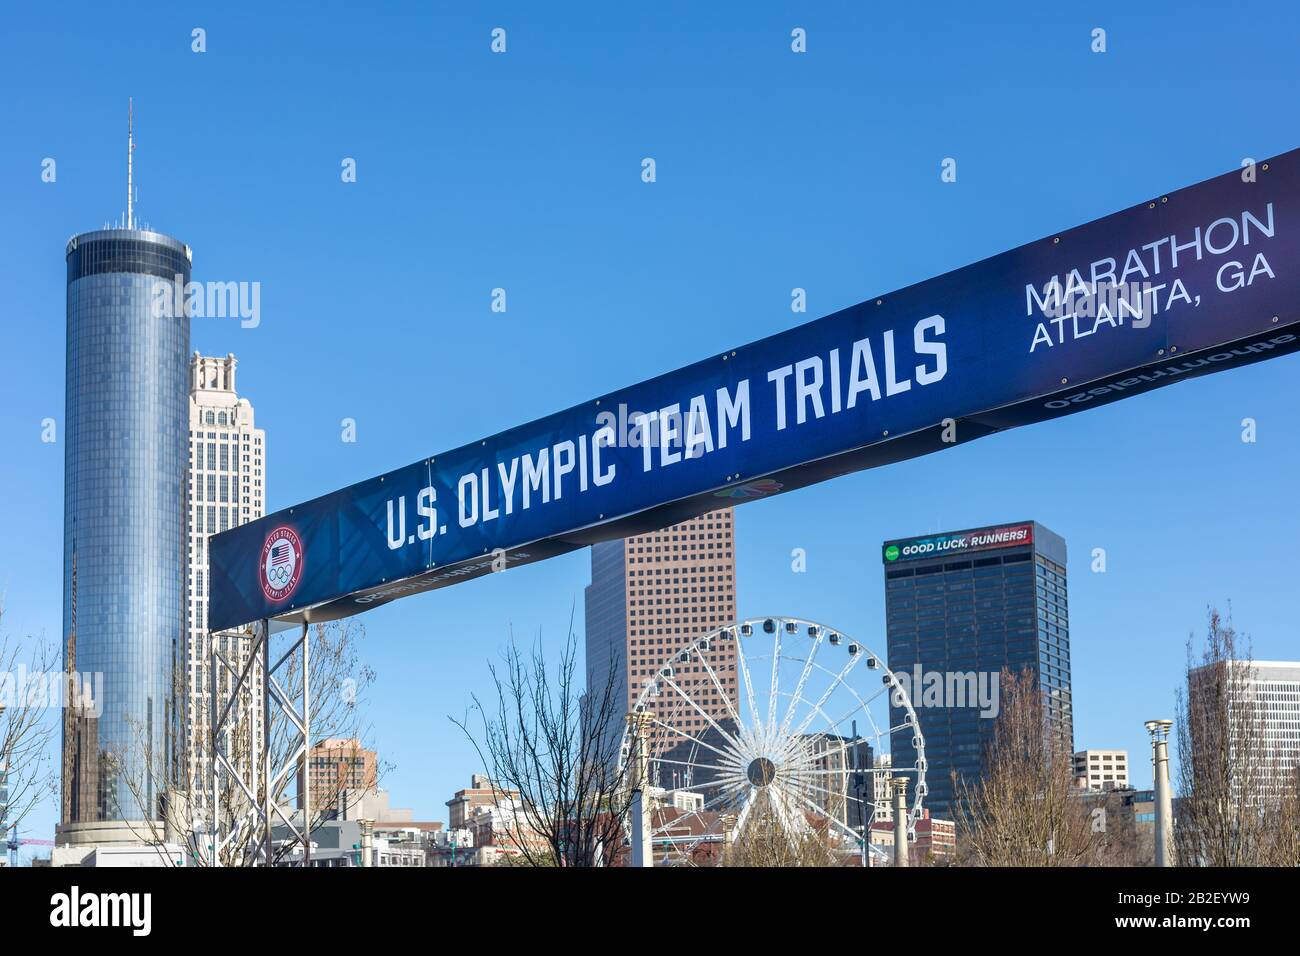 Atlanta, USA, February 29, 2020 Start and Finish line at the U.S. Olympic Team Trials Marathon. Stock Photo